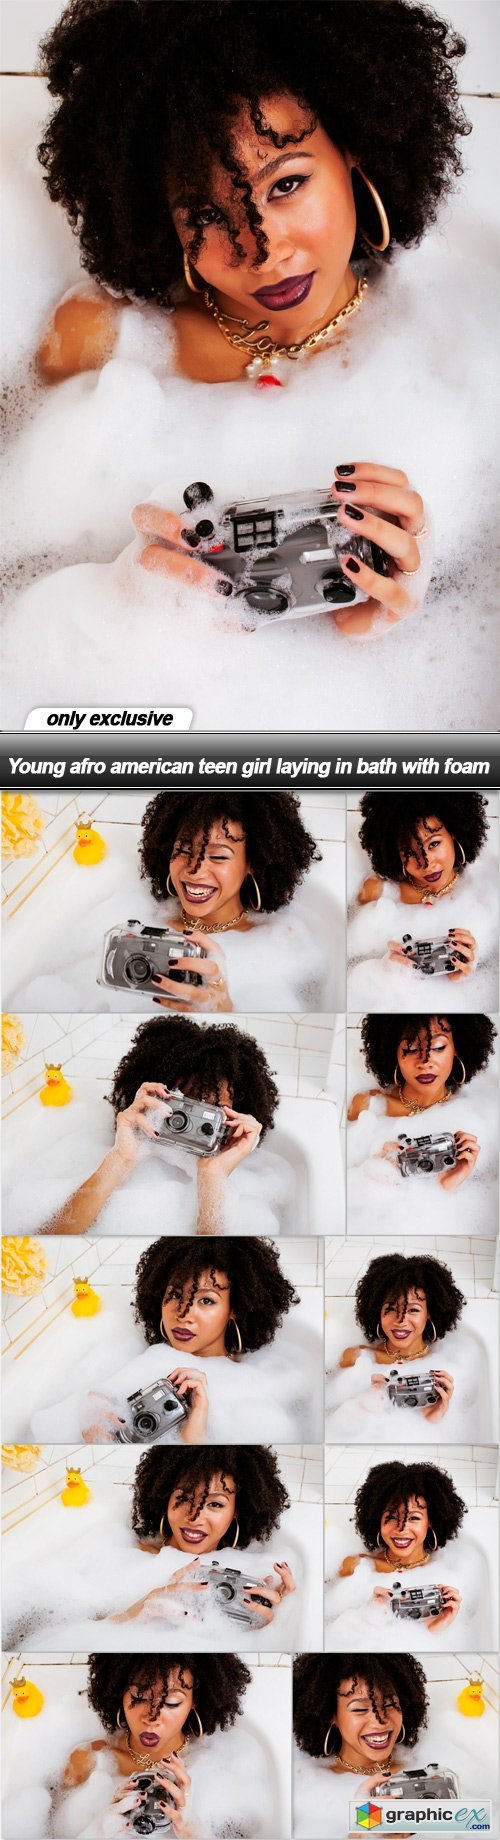 Young afro american teen girl laying in bath with foam - 10 UHQ JPEG